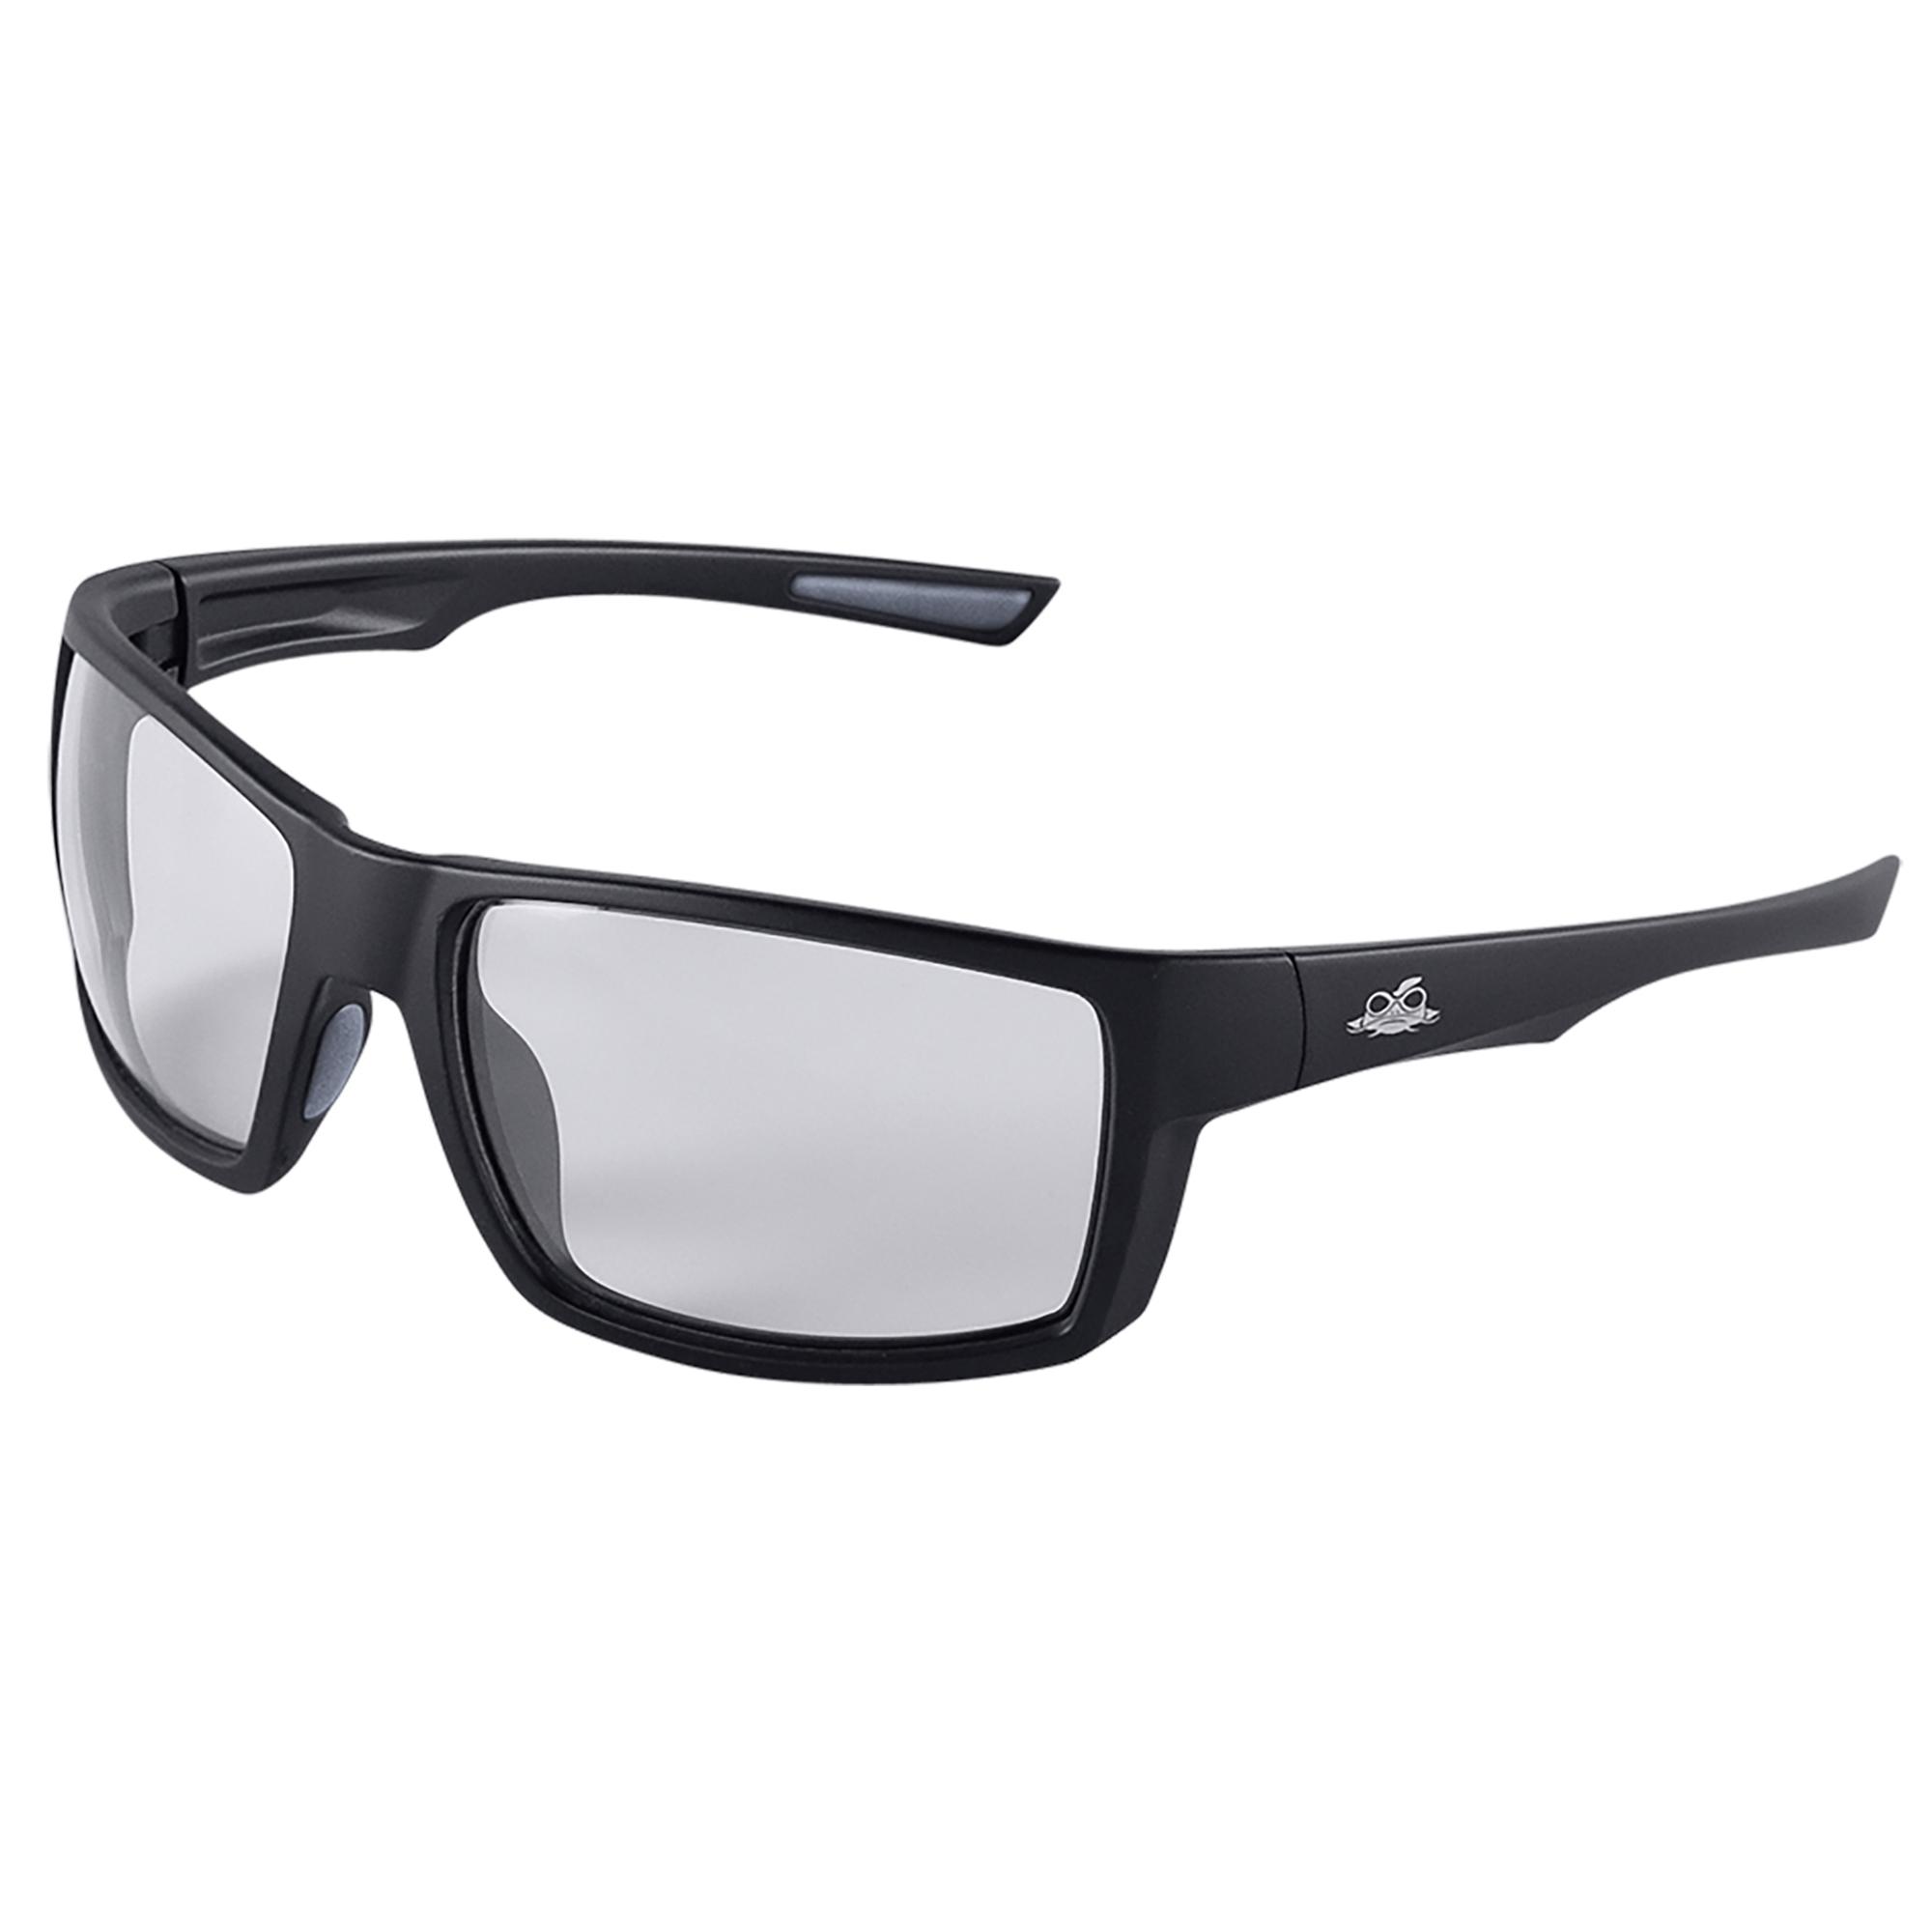 Bullhead BH26613PFT Sawfish Safety Glasses - Black Frame